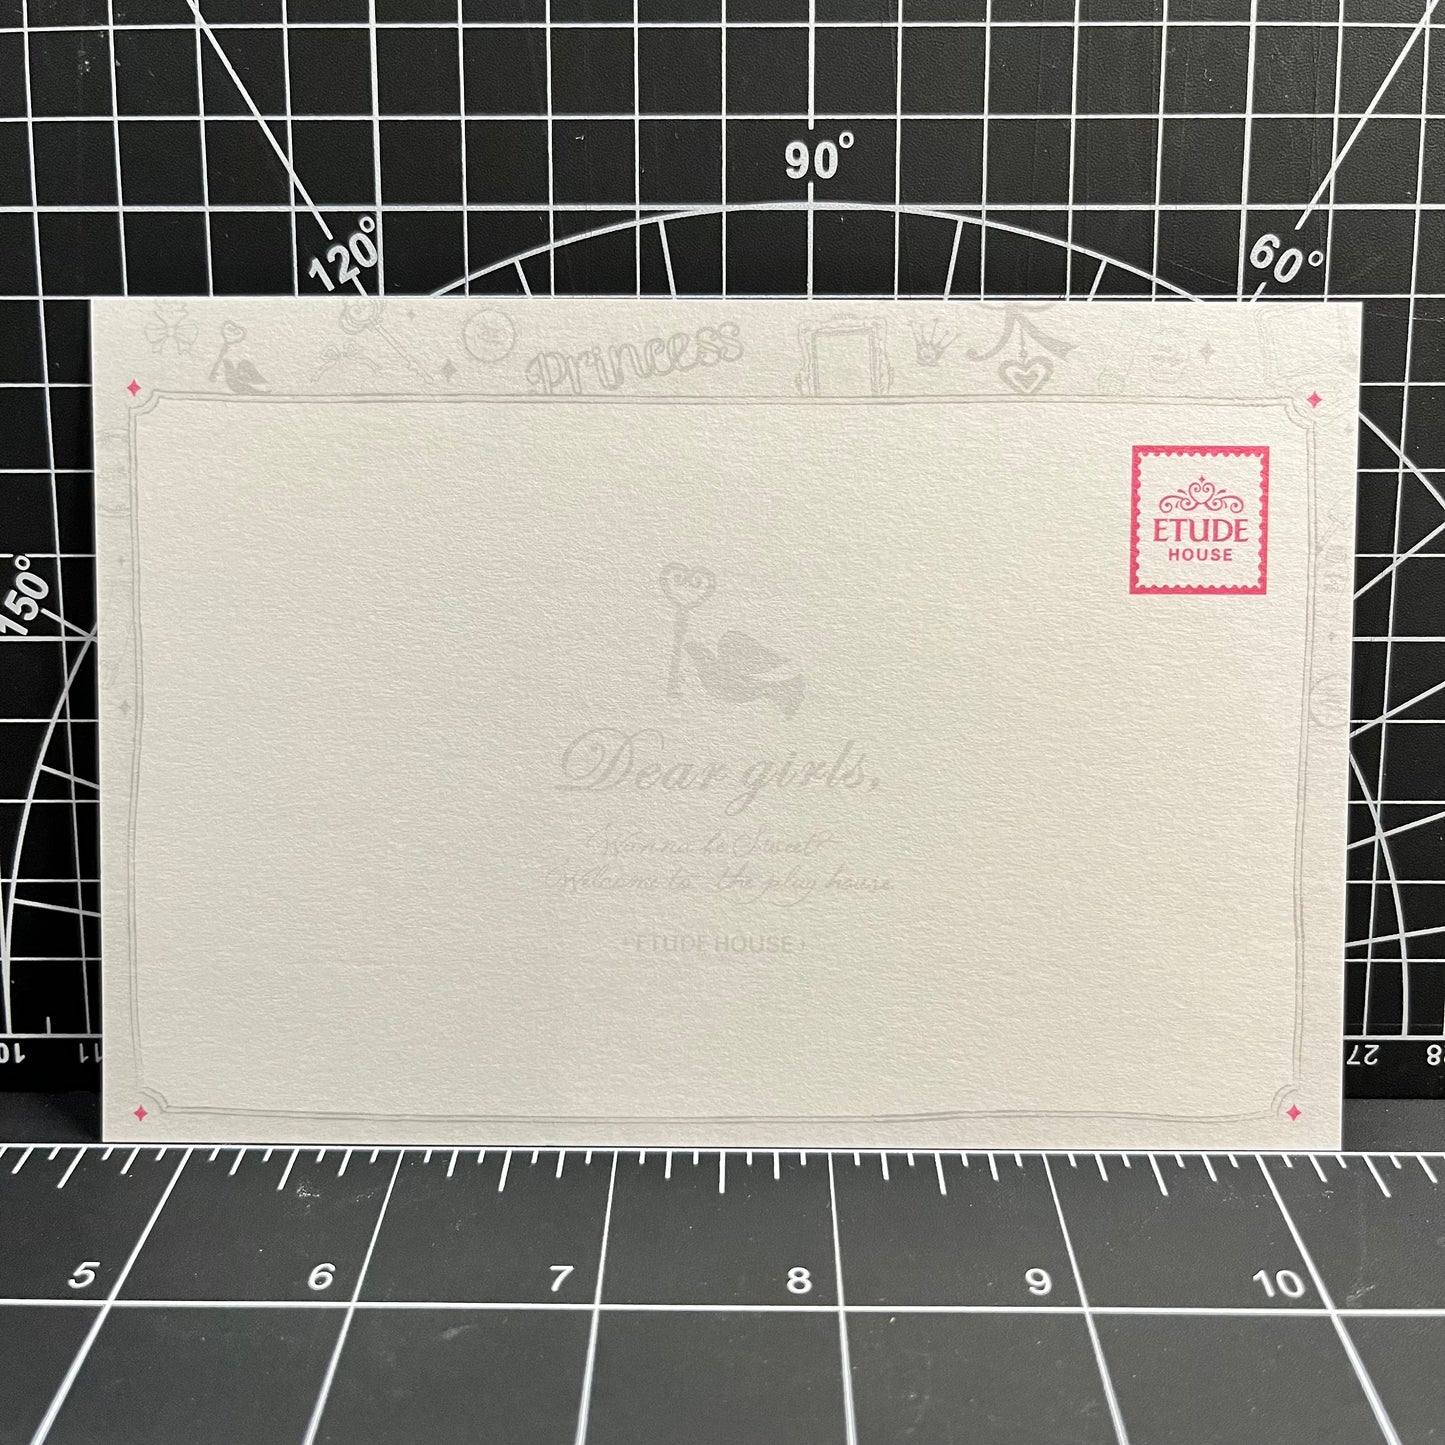 ETUDE HOUSE x SHINee Official Merchandise - Group Postcard